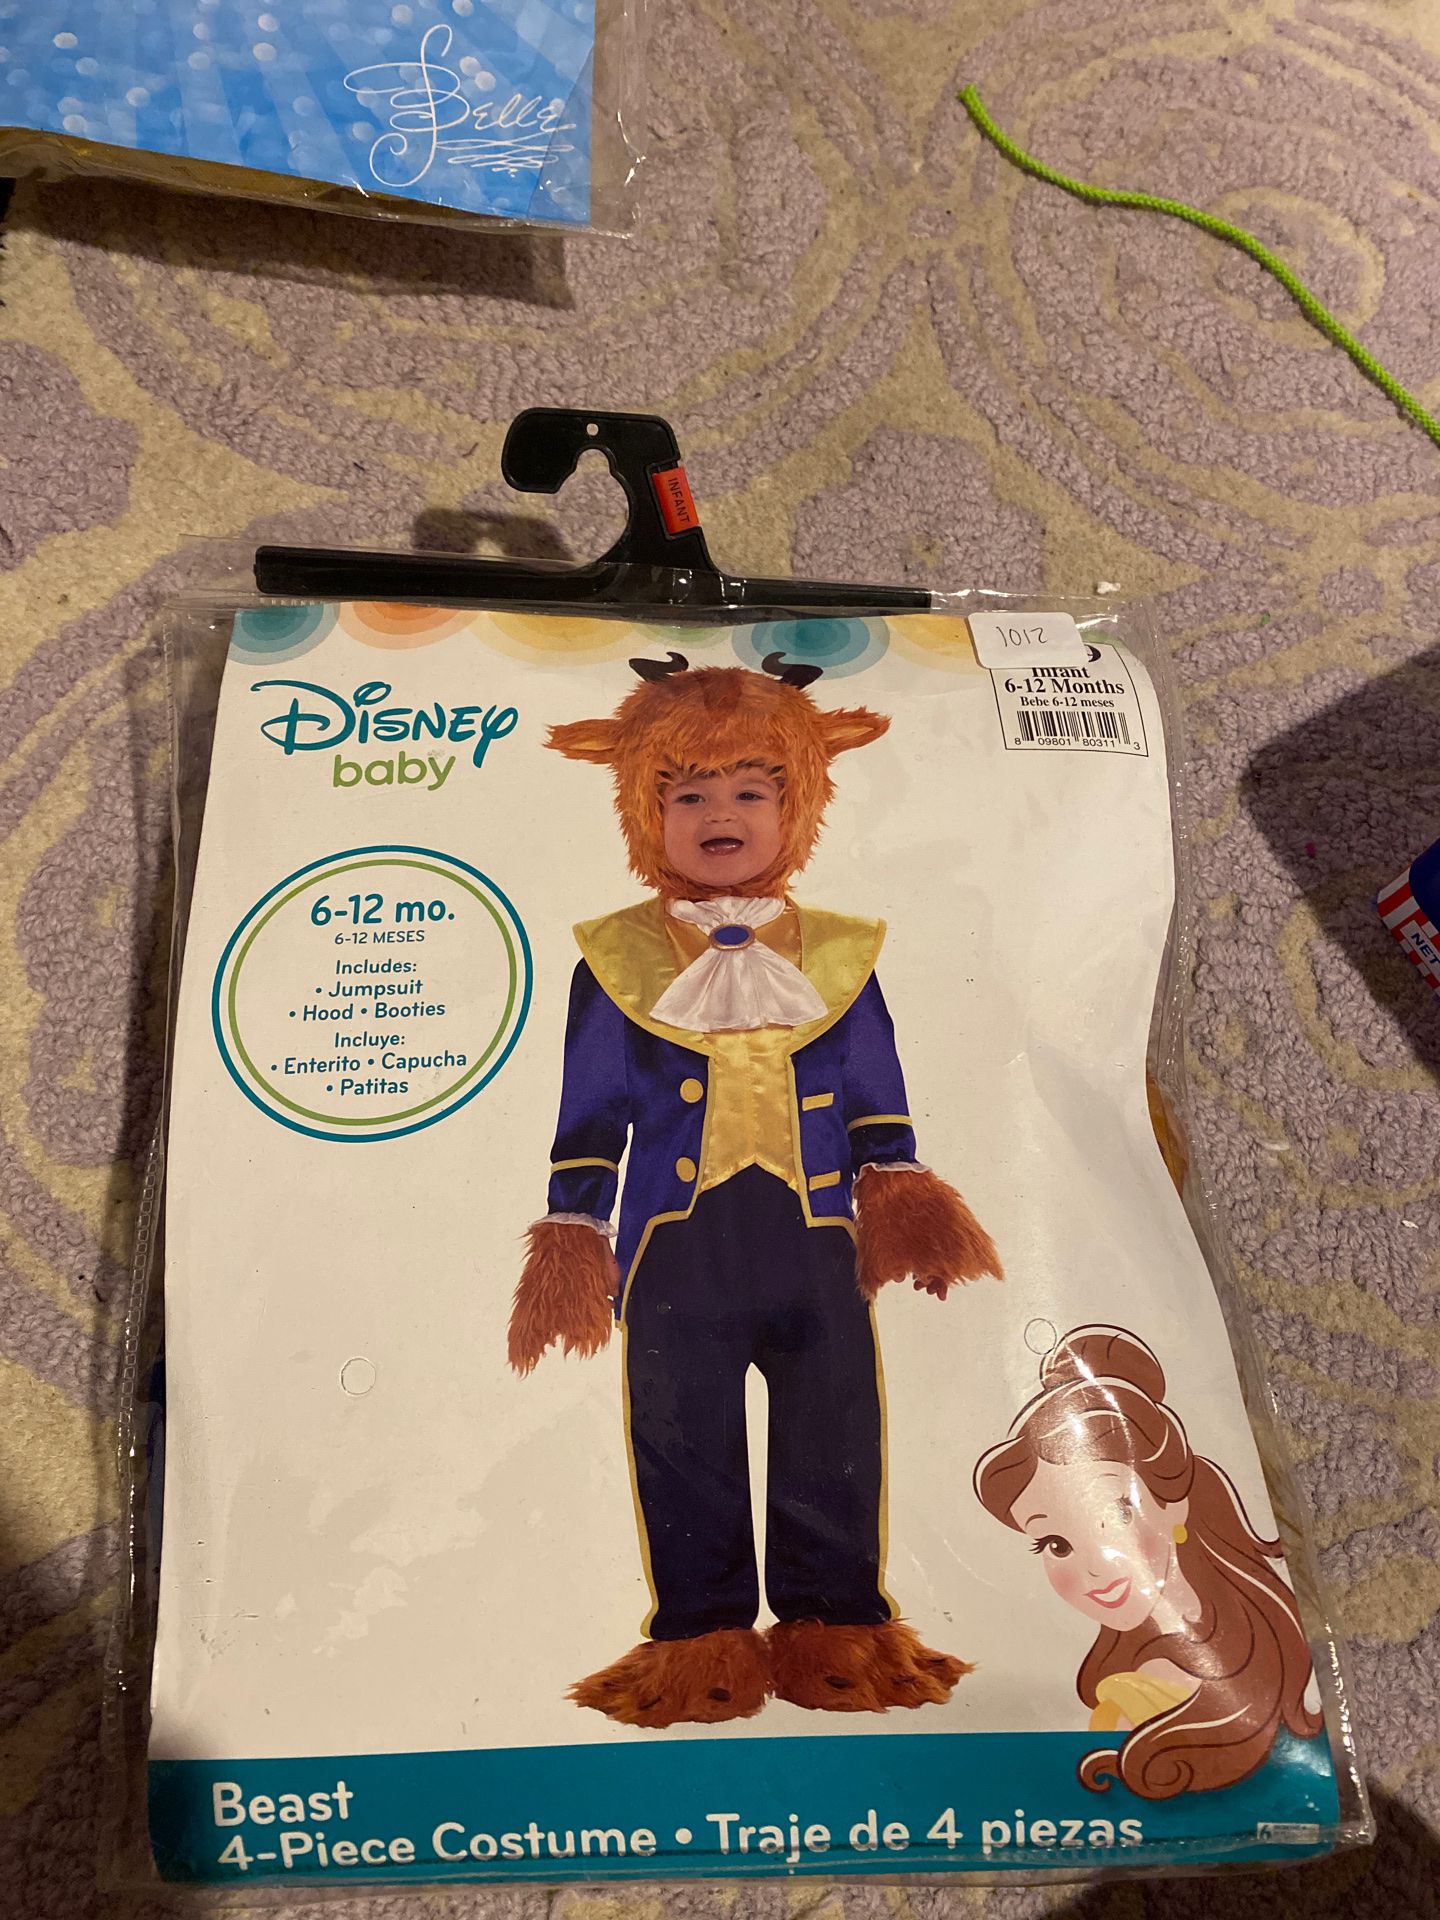 Disney baby beast 4 piece costume set size 6-12 mos